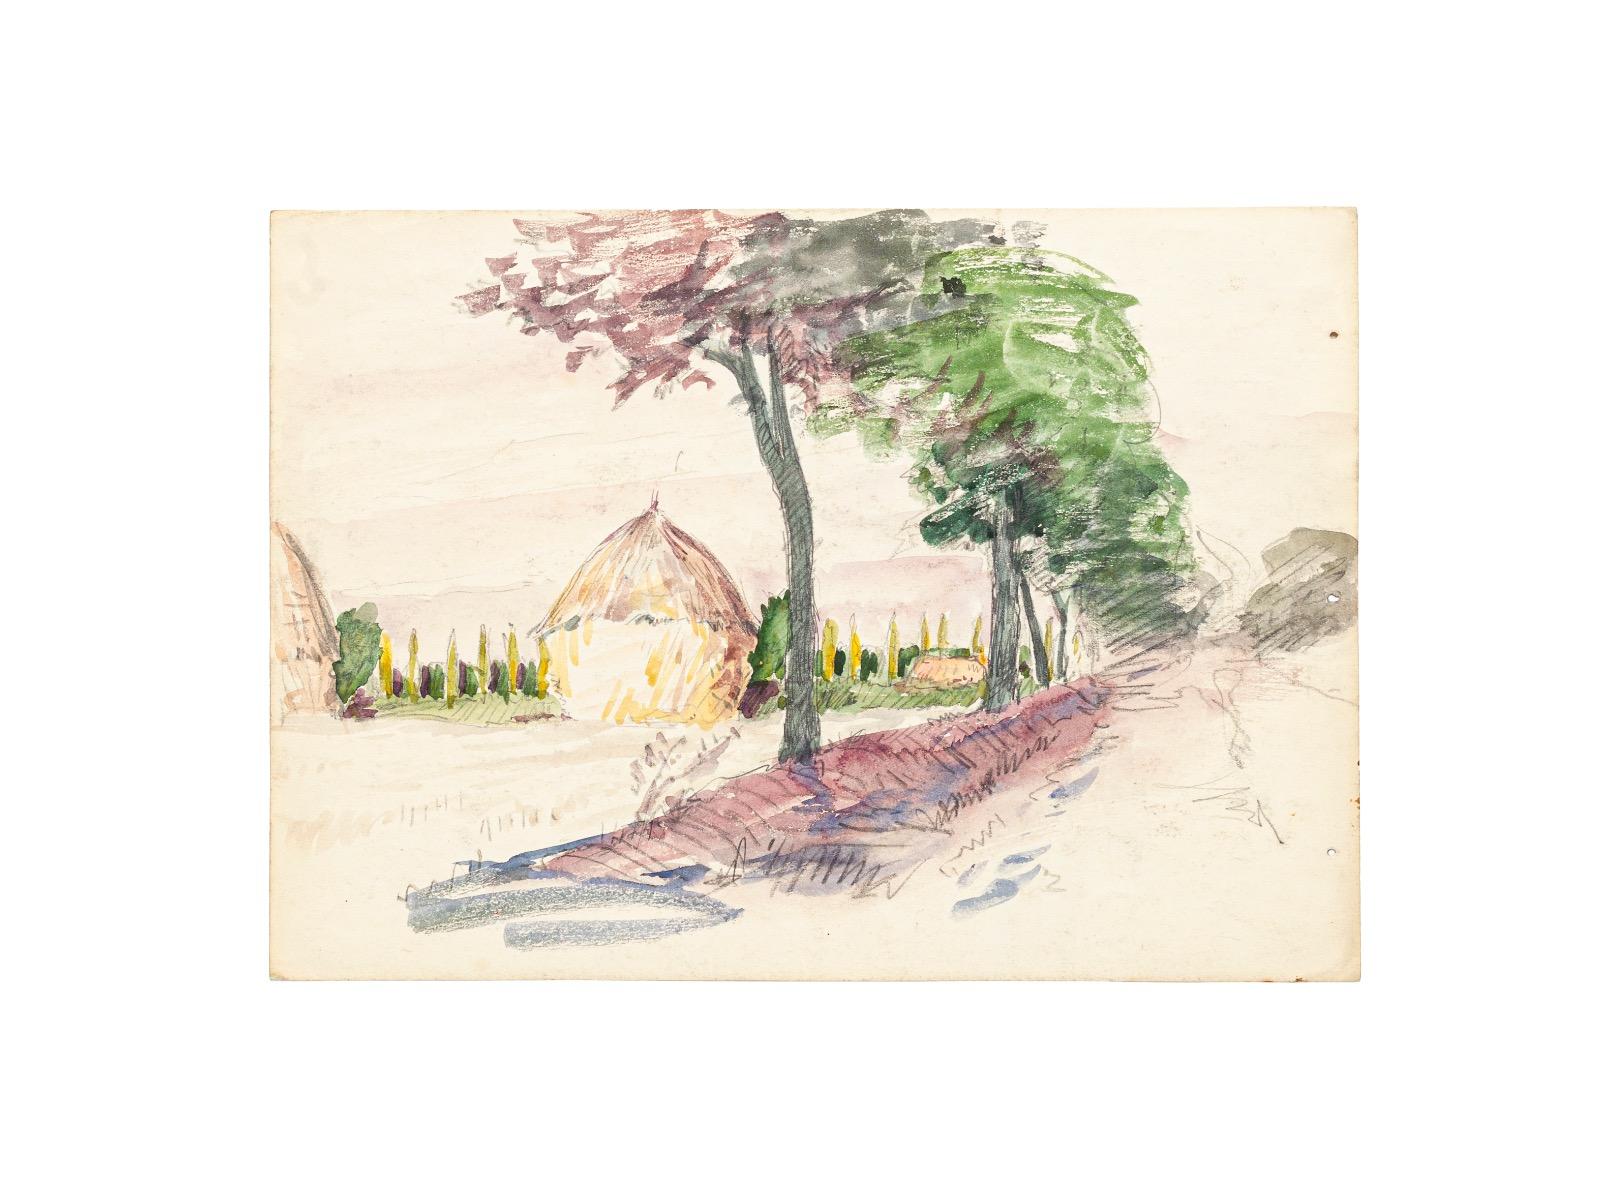 Jean Delpech Animal Art - Countryside - Original Watercolor on Paper by Jean Raymond Delpech - 20 Century